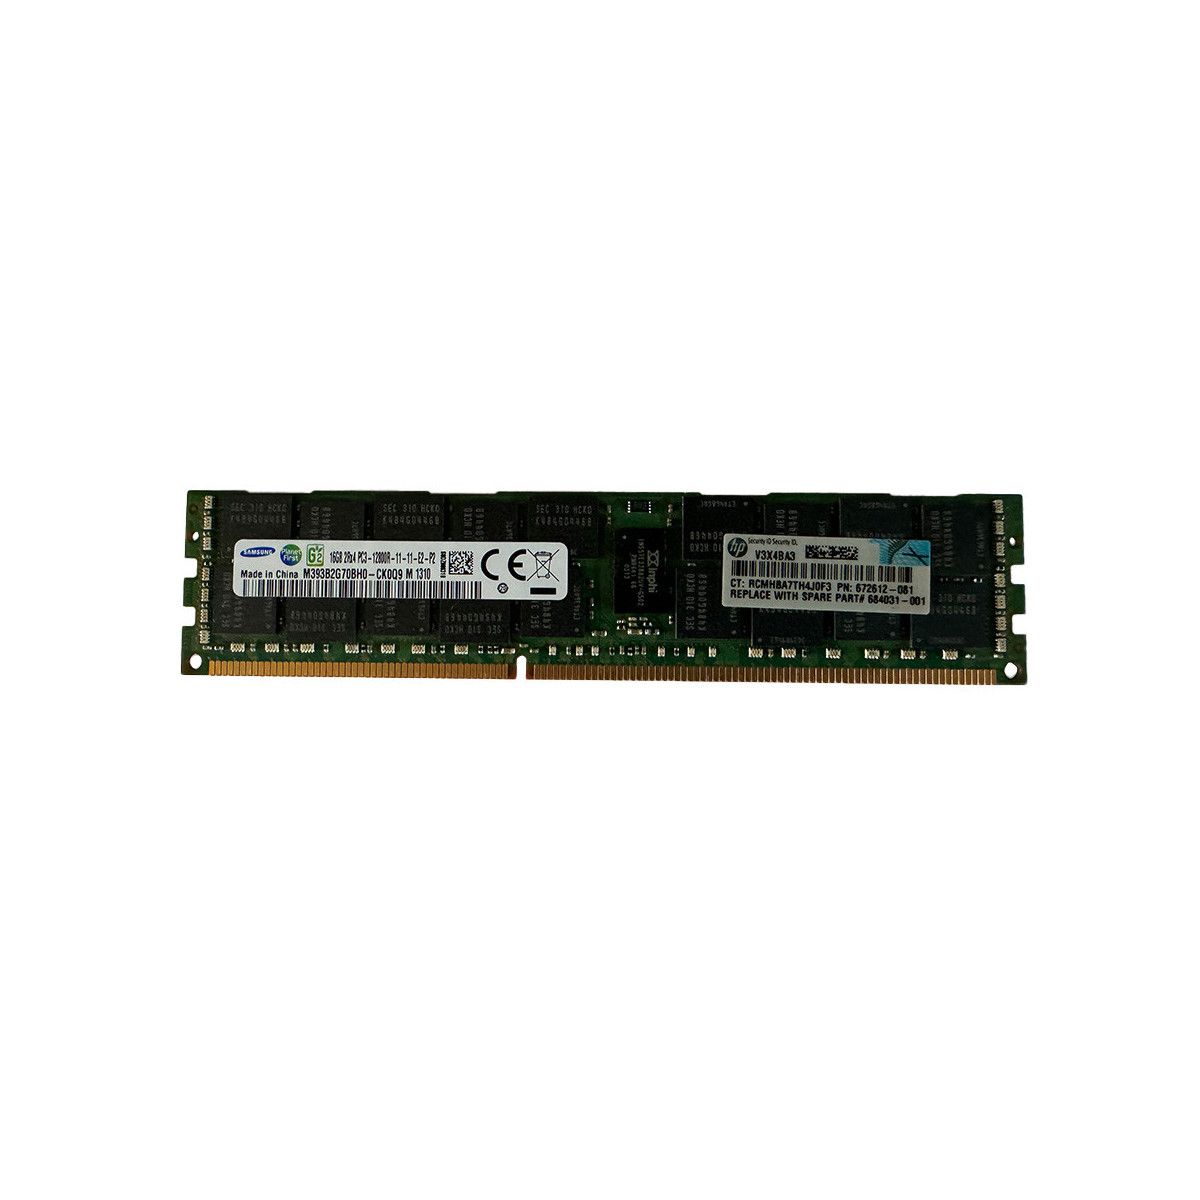 672633-B21-MS - Memstar 1x 16GB DDR3-1600 RDIMM PC3-12800R - Mem-Star Kompatibel OEM Speichermedien 1 - Memstar 